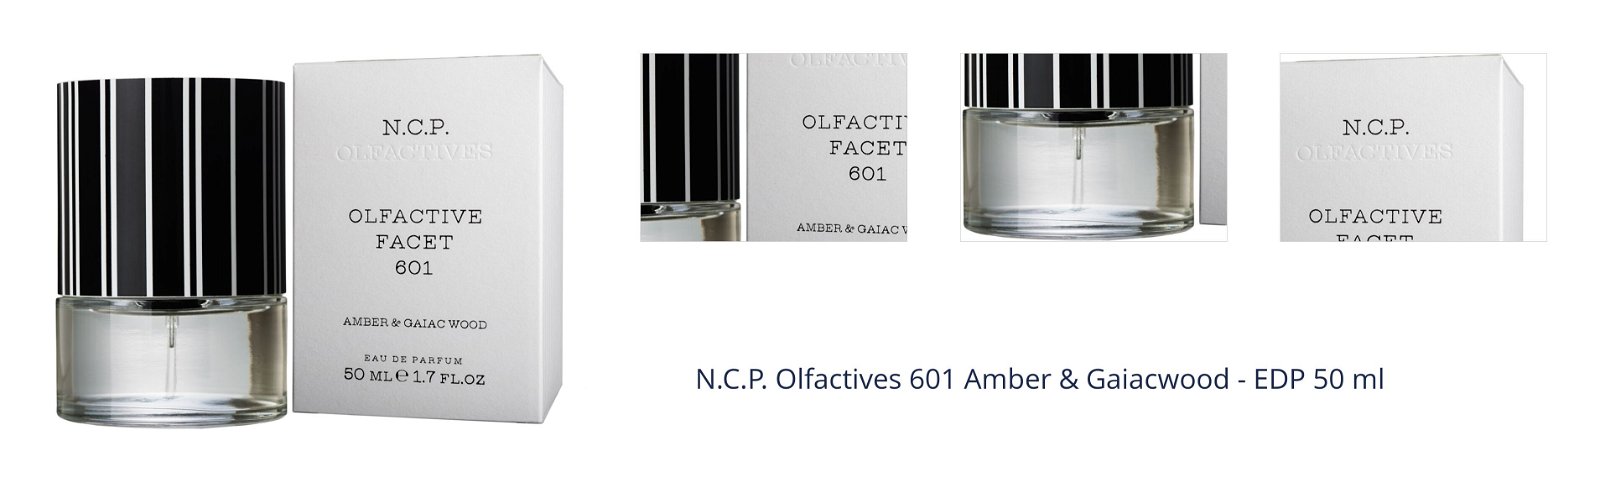 N.C.P. Olfactives 601 Amber & Gaiacwood - EDP 50 ml 1